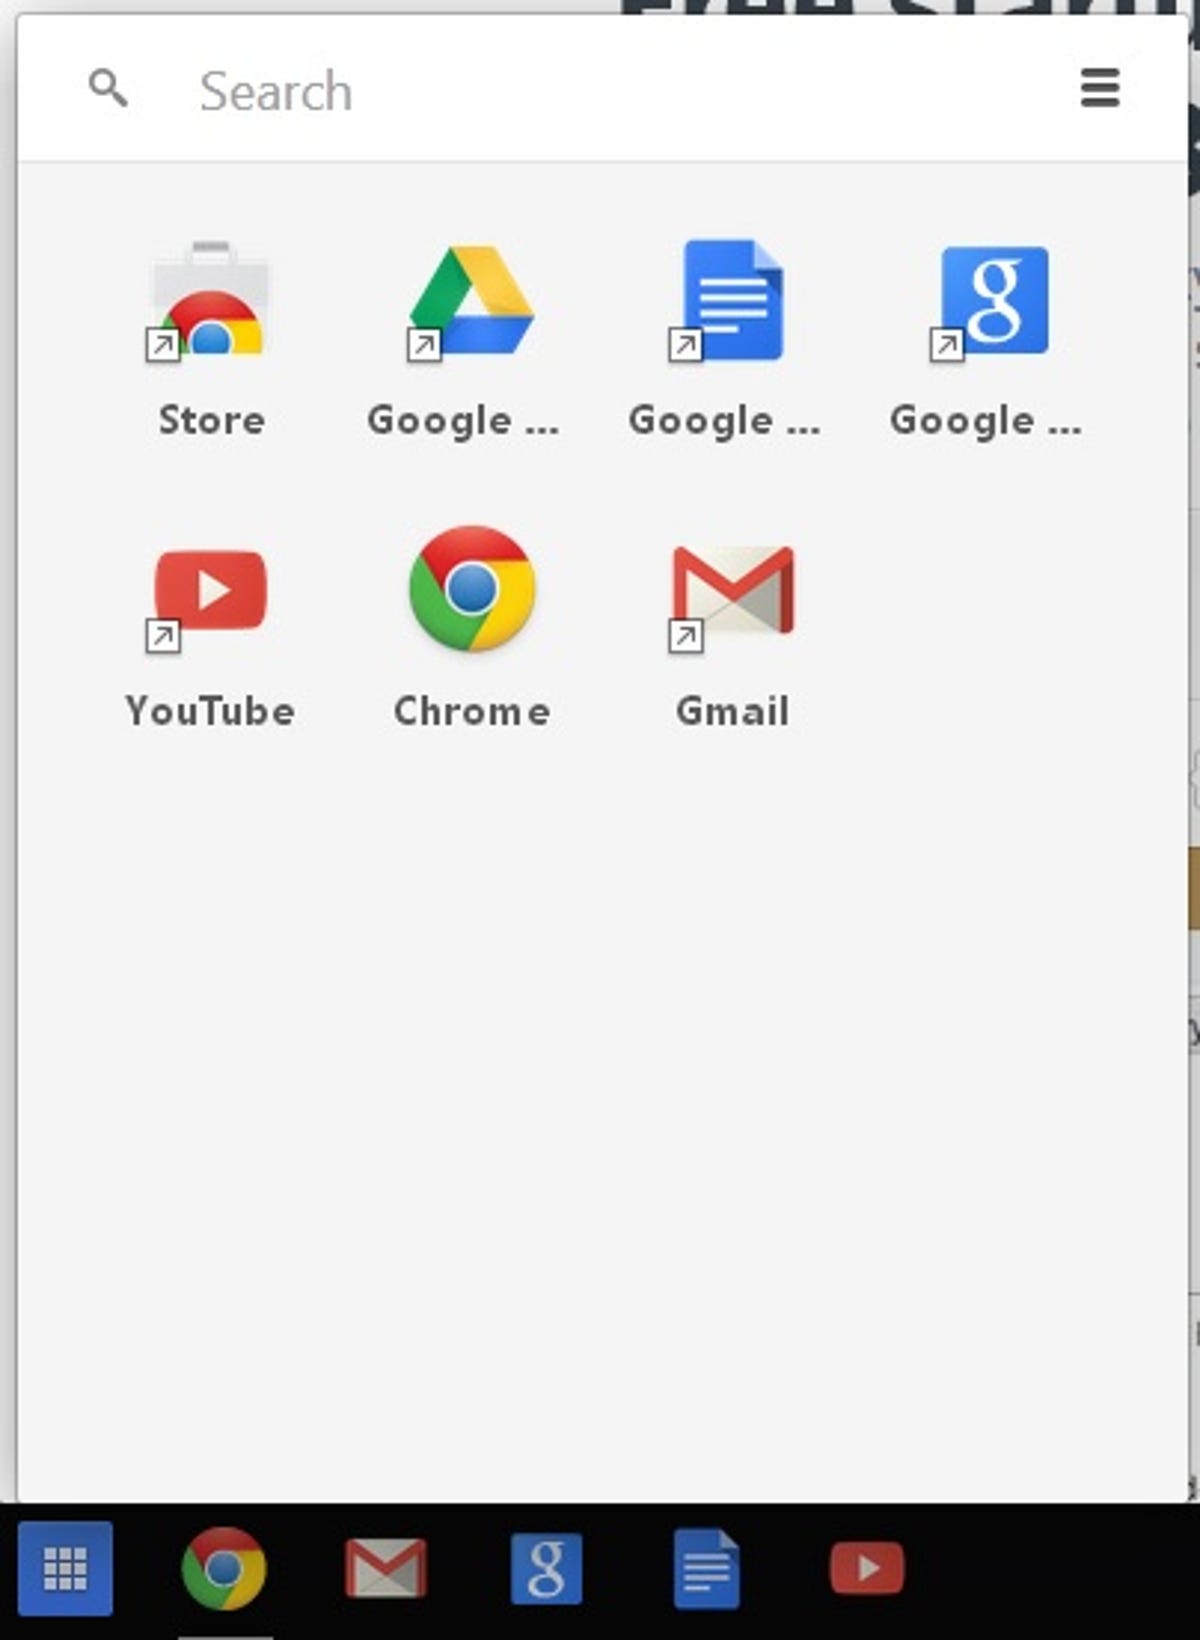 Google Chrome 32 apps window in native Windows 8 mode